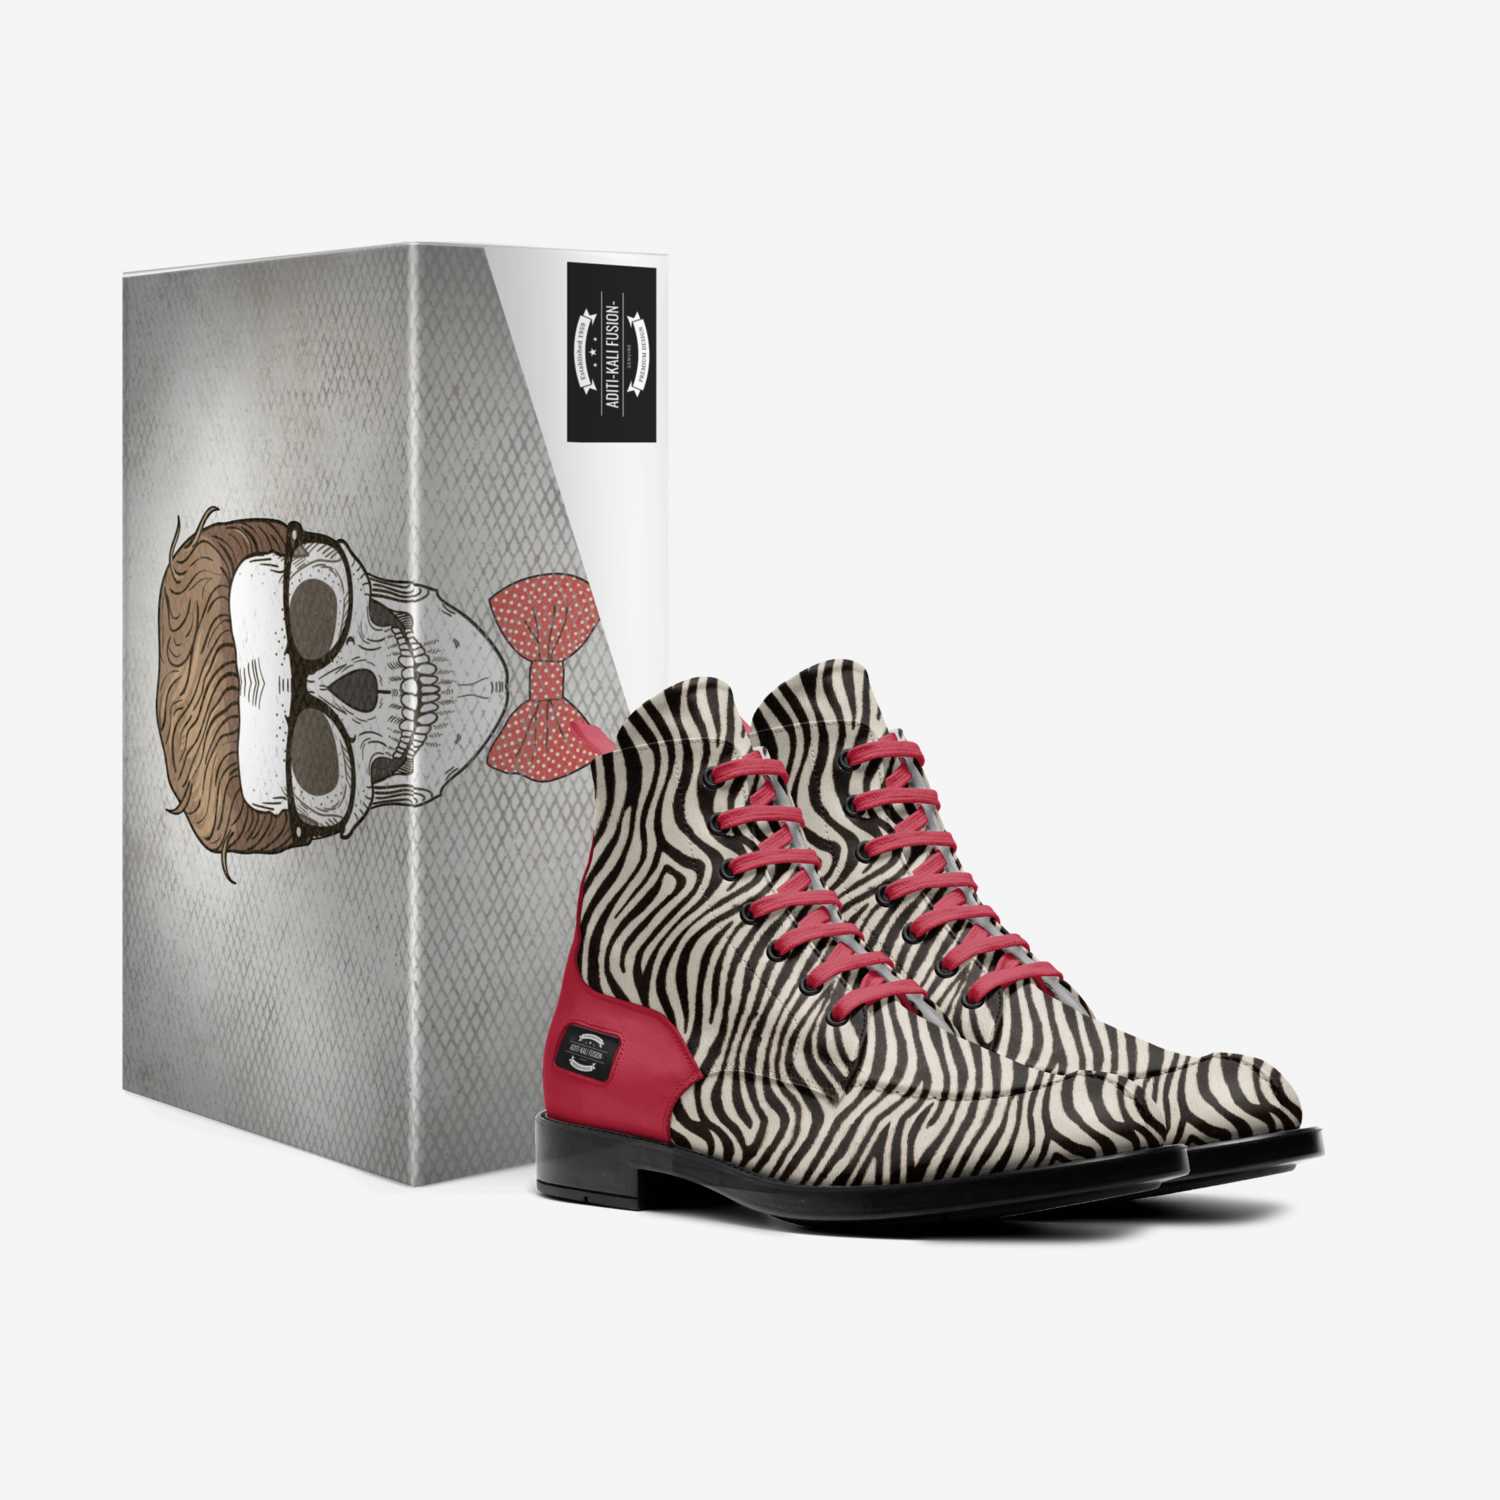 ADITI-KALI FUSION- custom made in Italy shoes by Aditi-kali Of Wonkey Donkey Bazaar | Box view